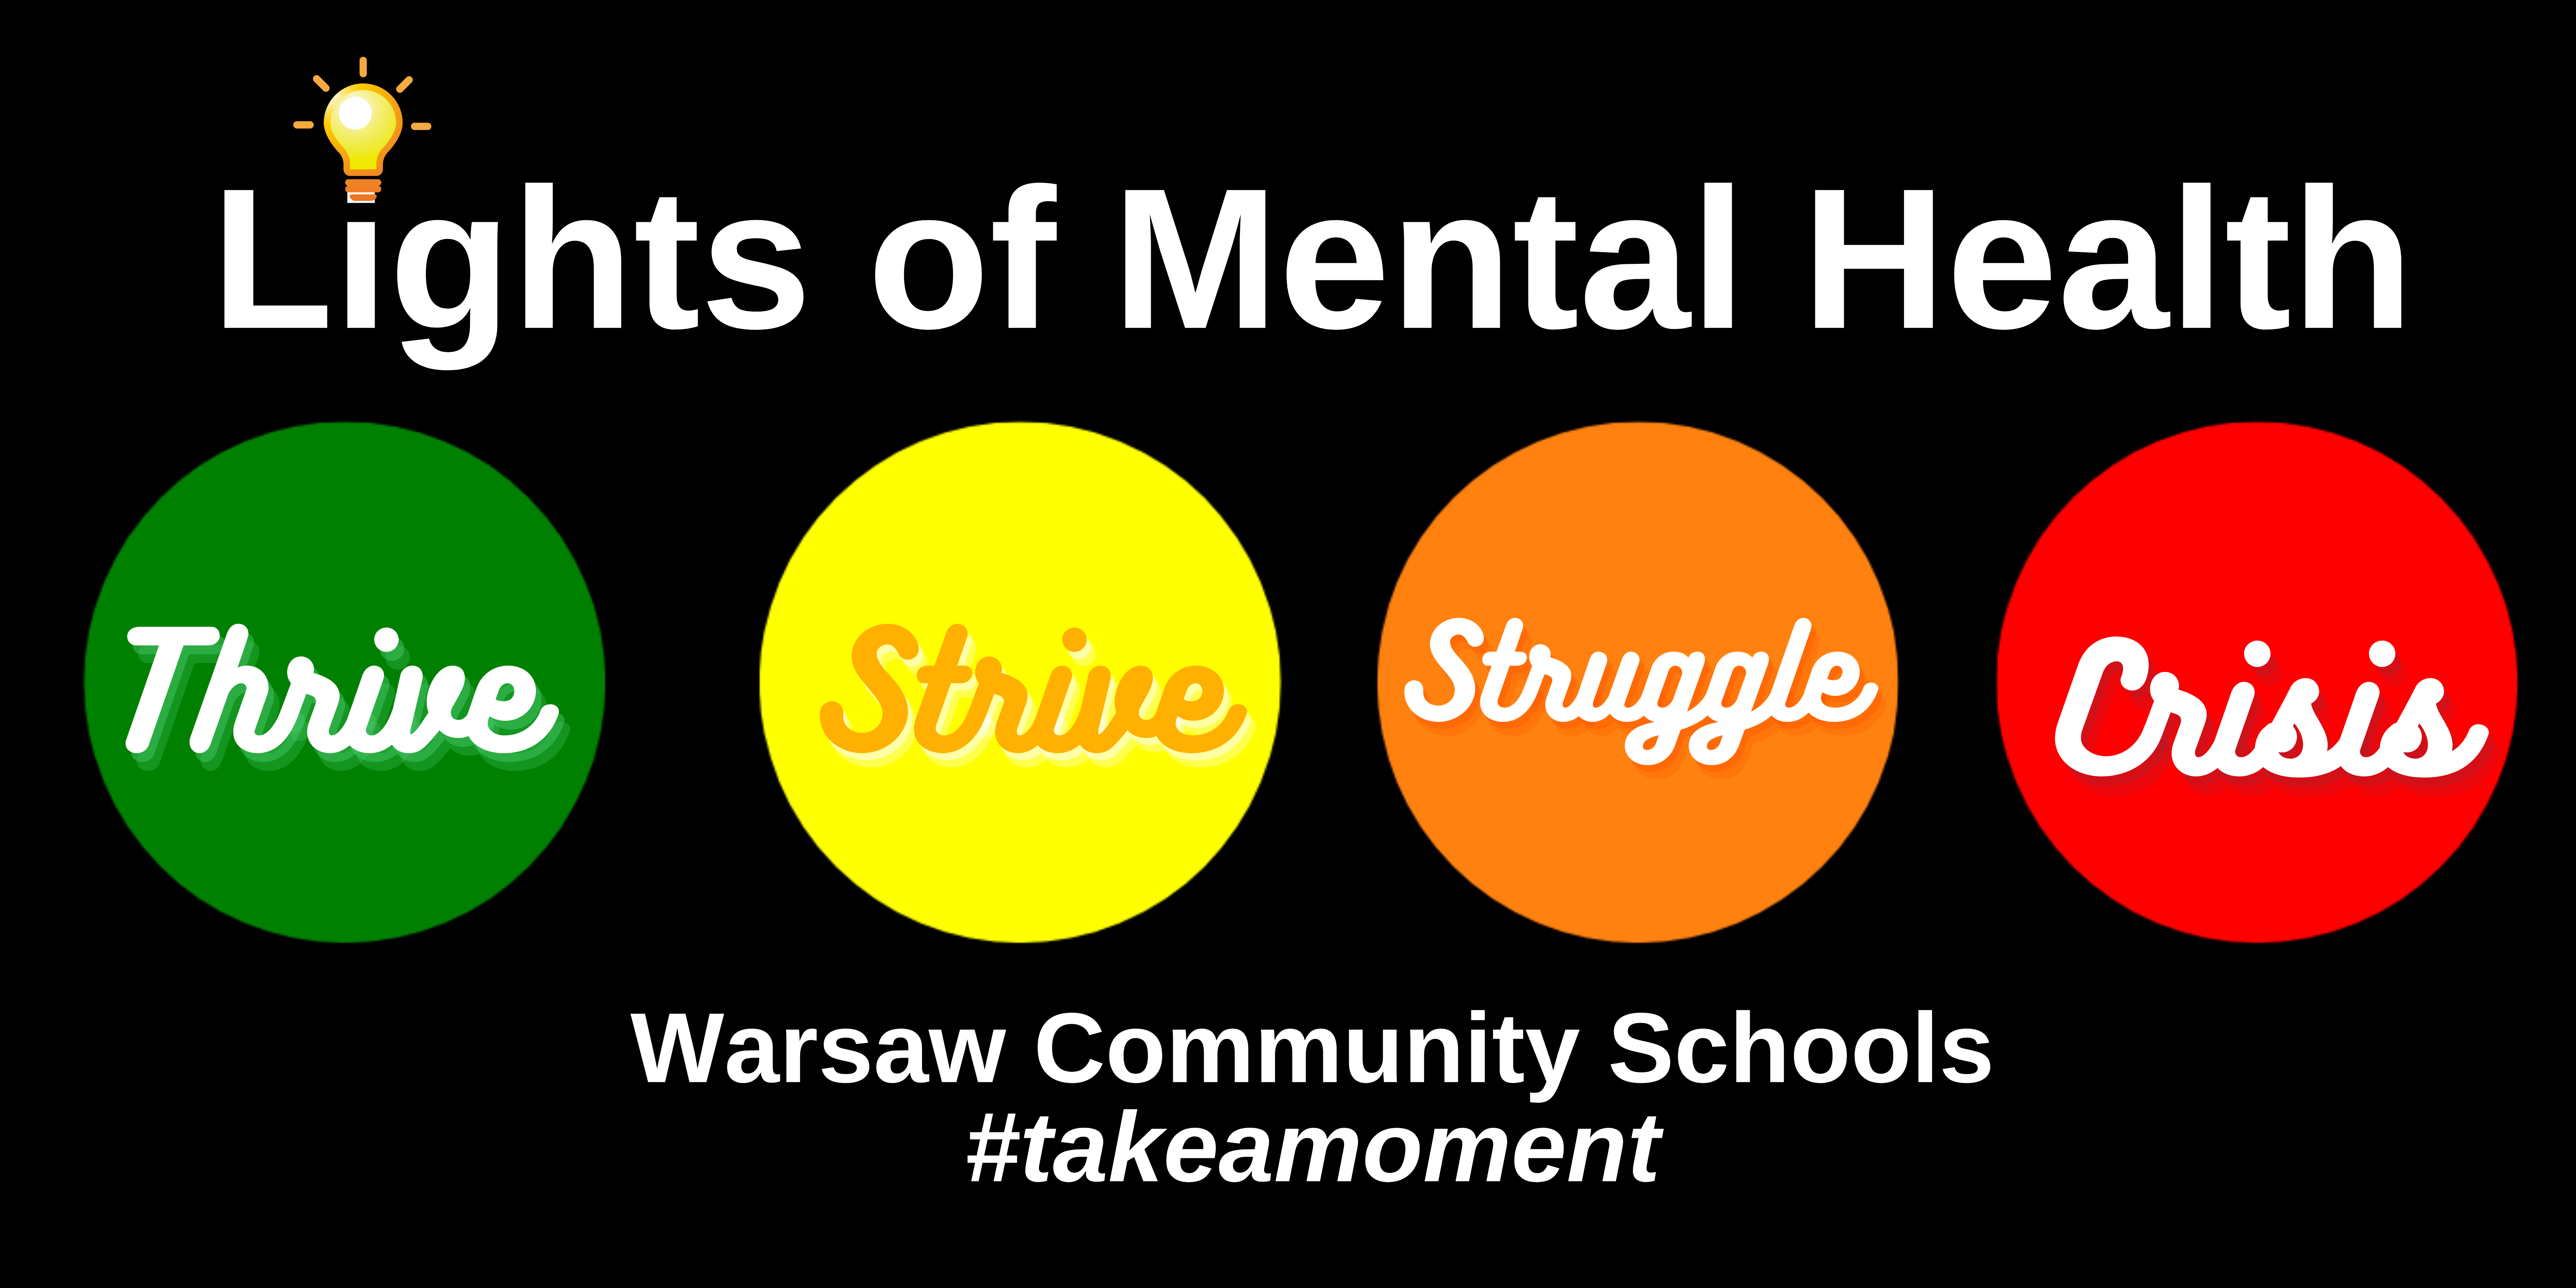 Lights of Mental Health Thrive, Strive, Struggle, Crisis. Warsaw Community Schools #takeamoment